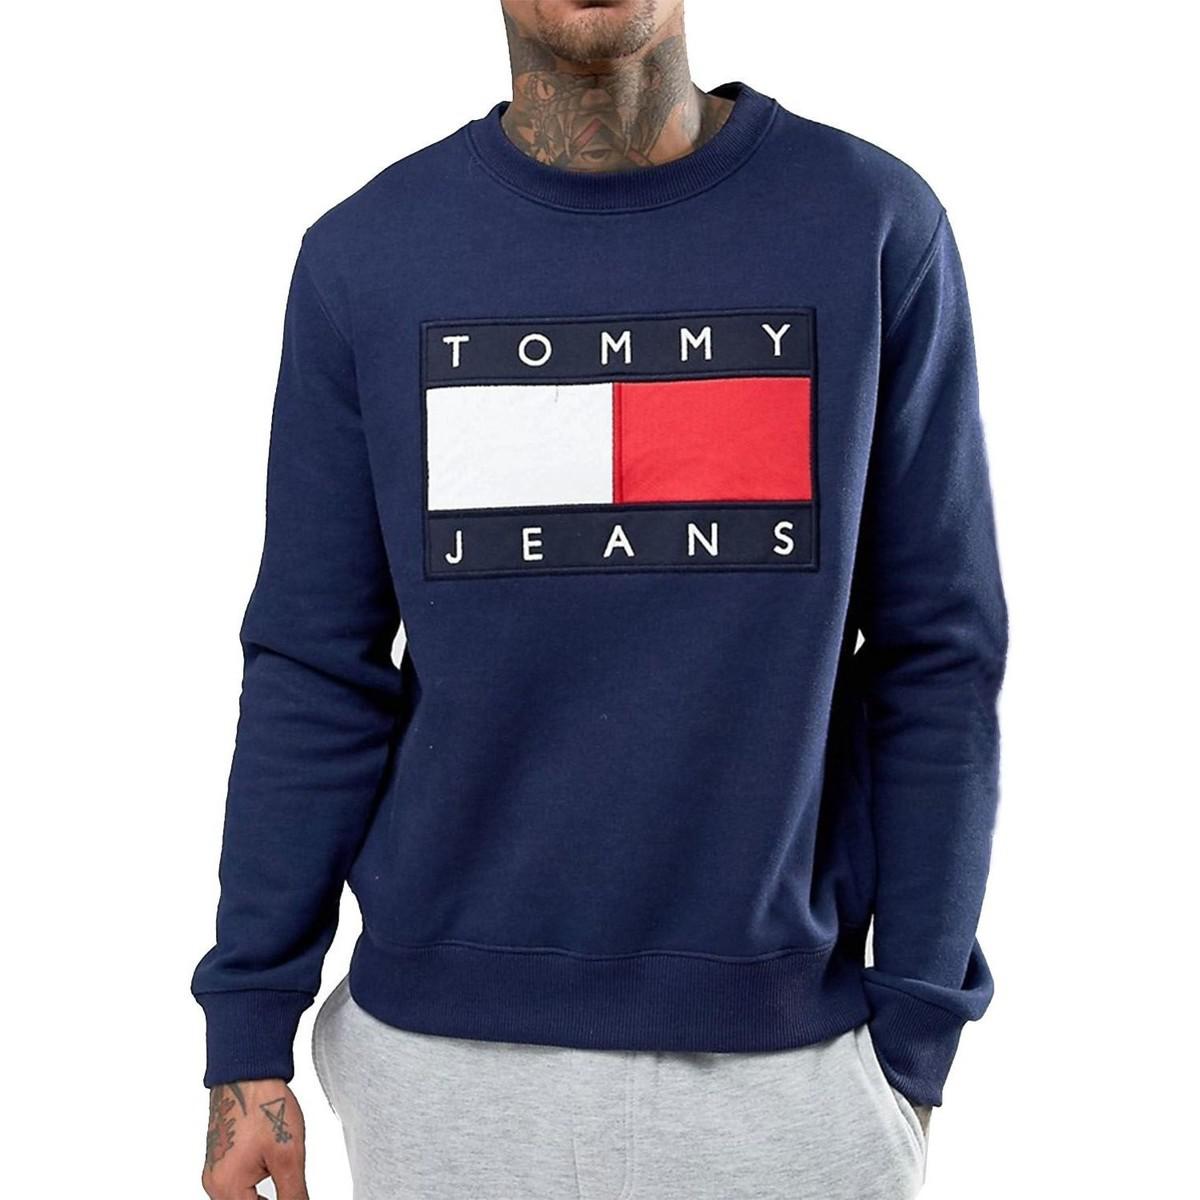 tommy sweatshirt mens off 69% - online 